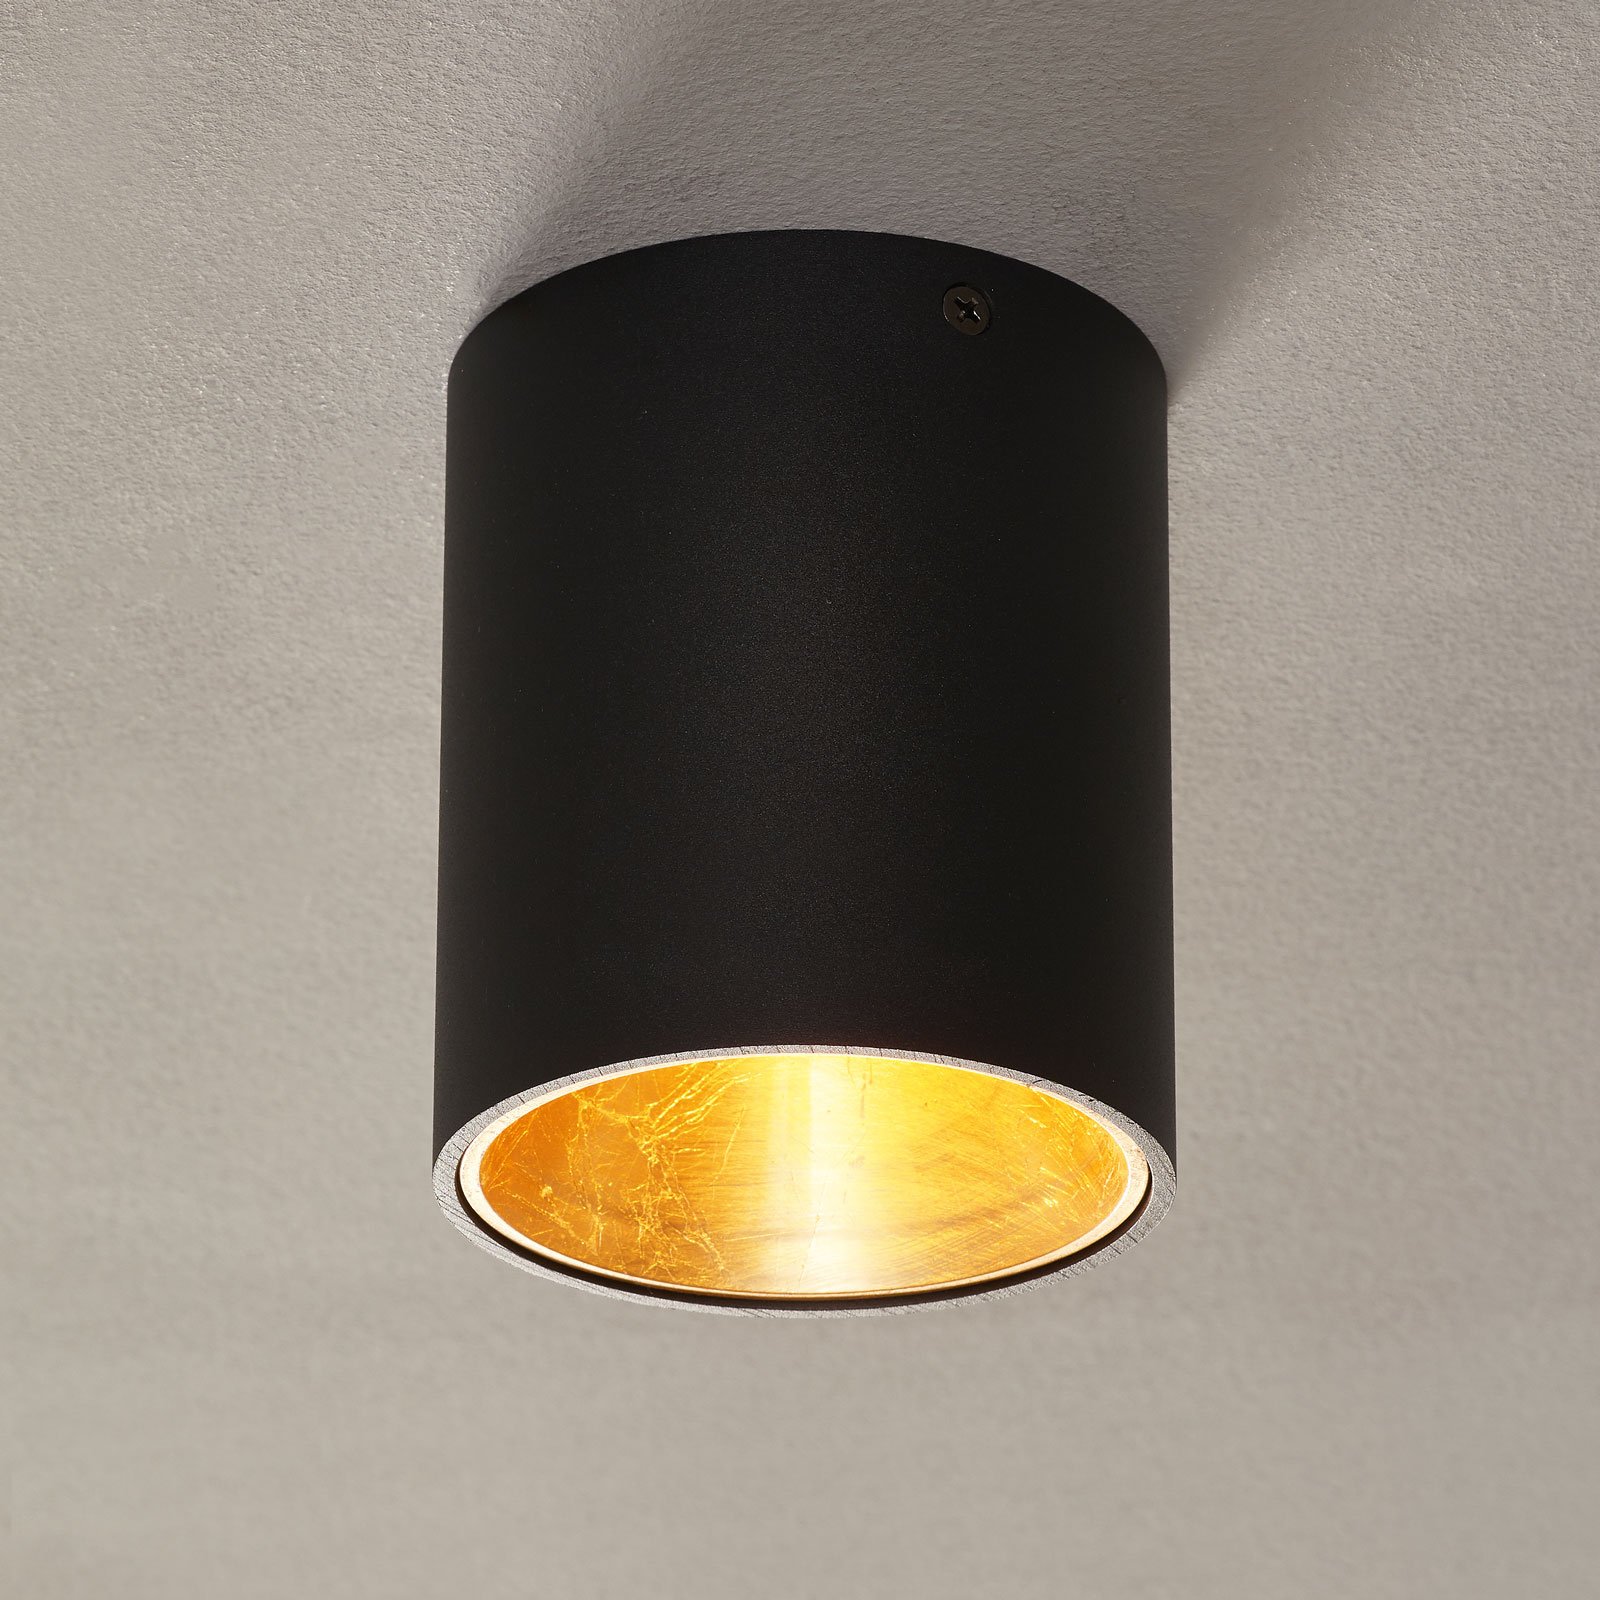 LED stropna lampa Polasso okrugla, crna i zlatna